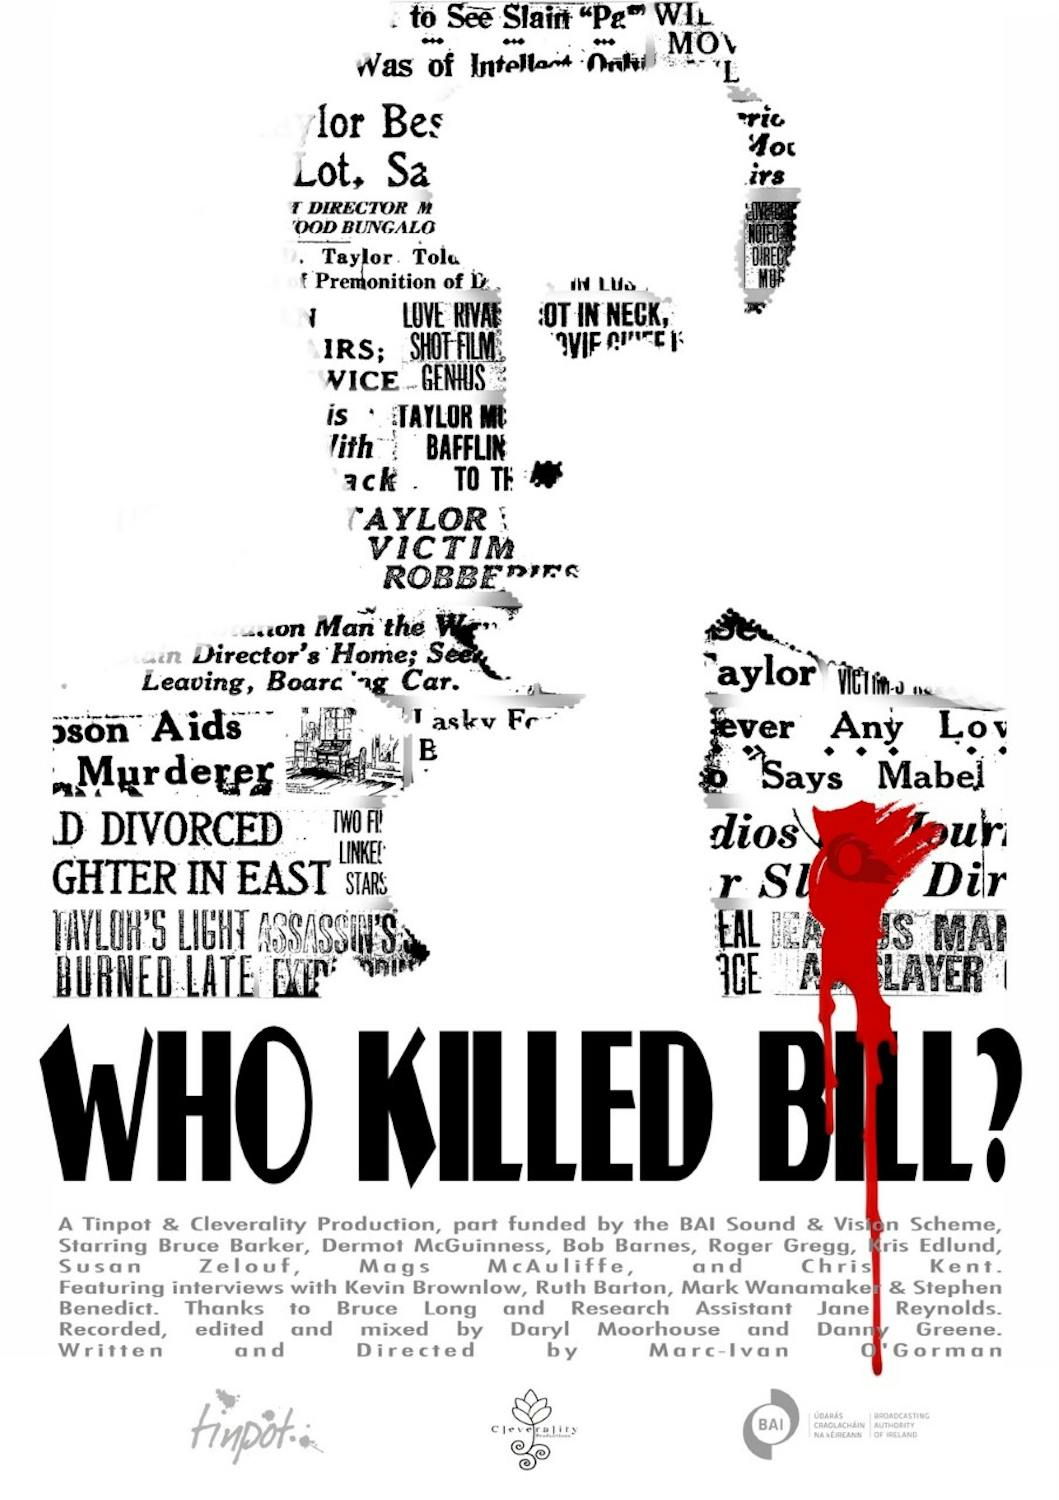 Who killed Bill?